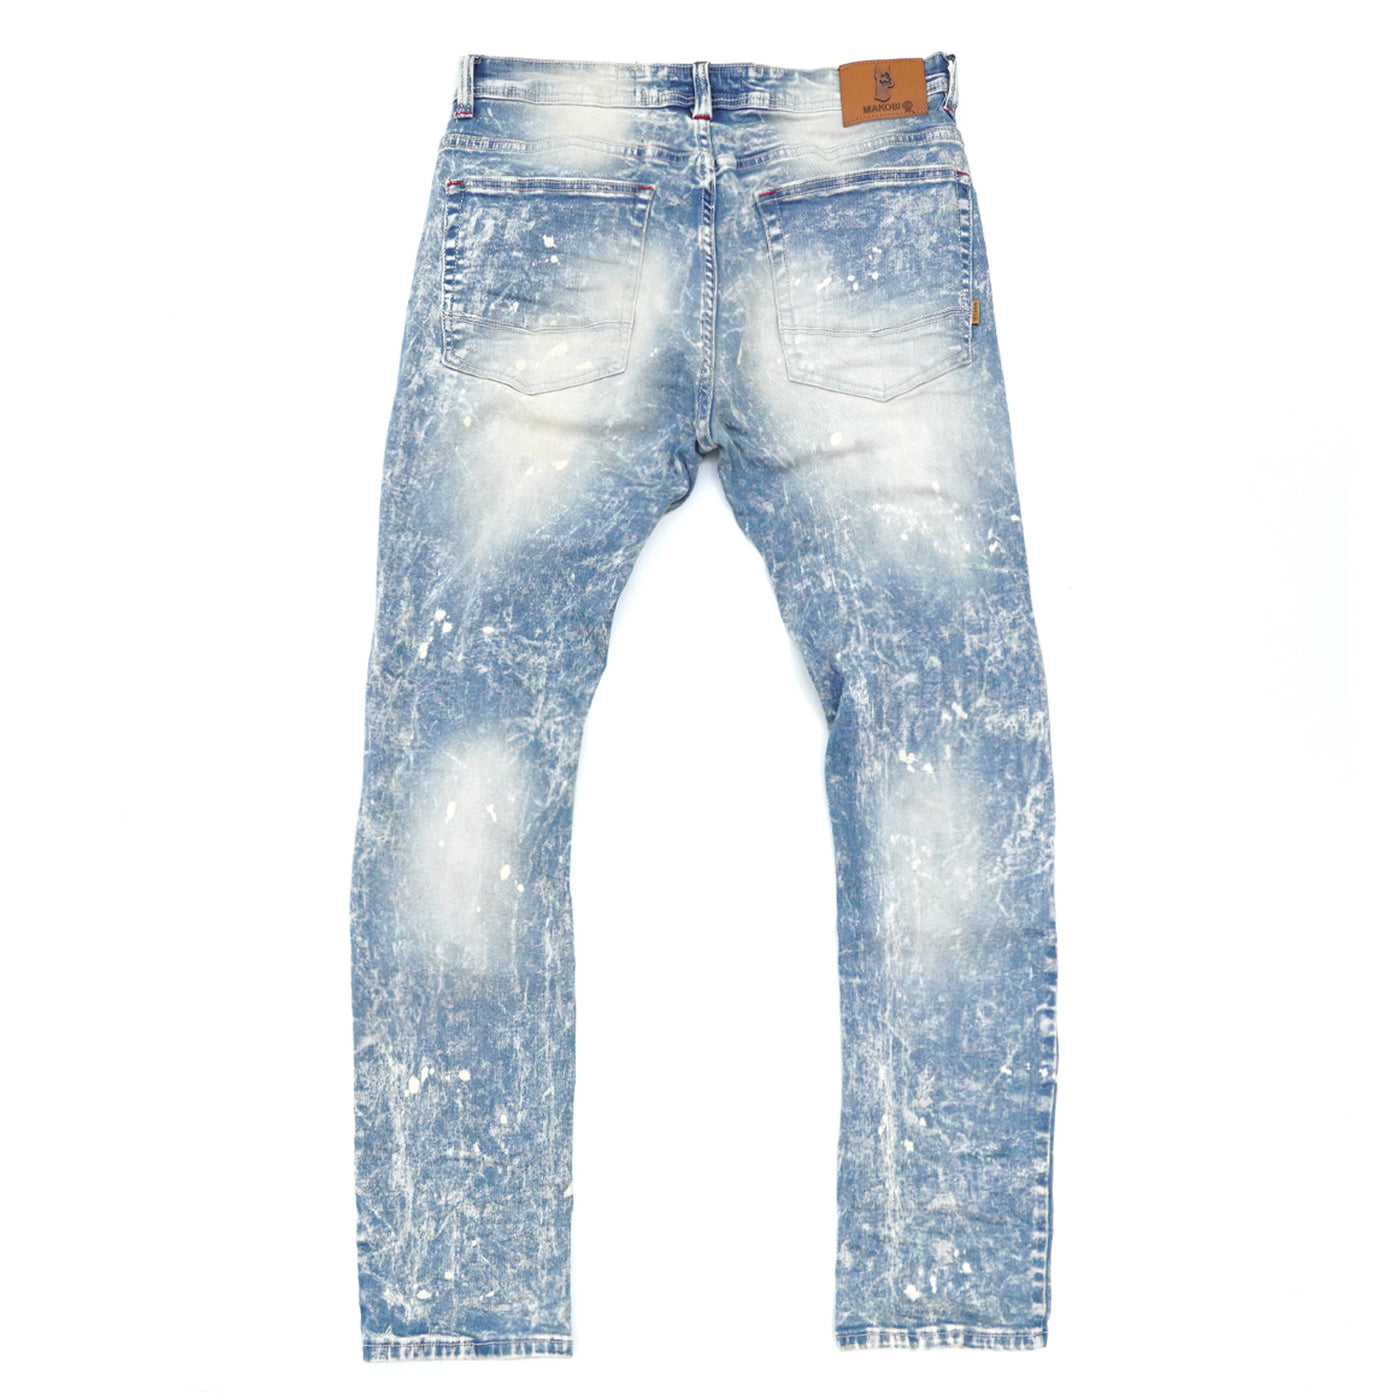 M1981 Go Gettas Denim Jeans - Dirt Wash